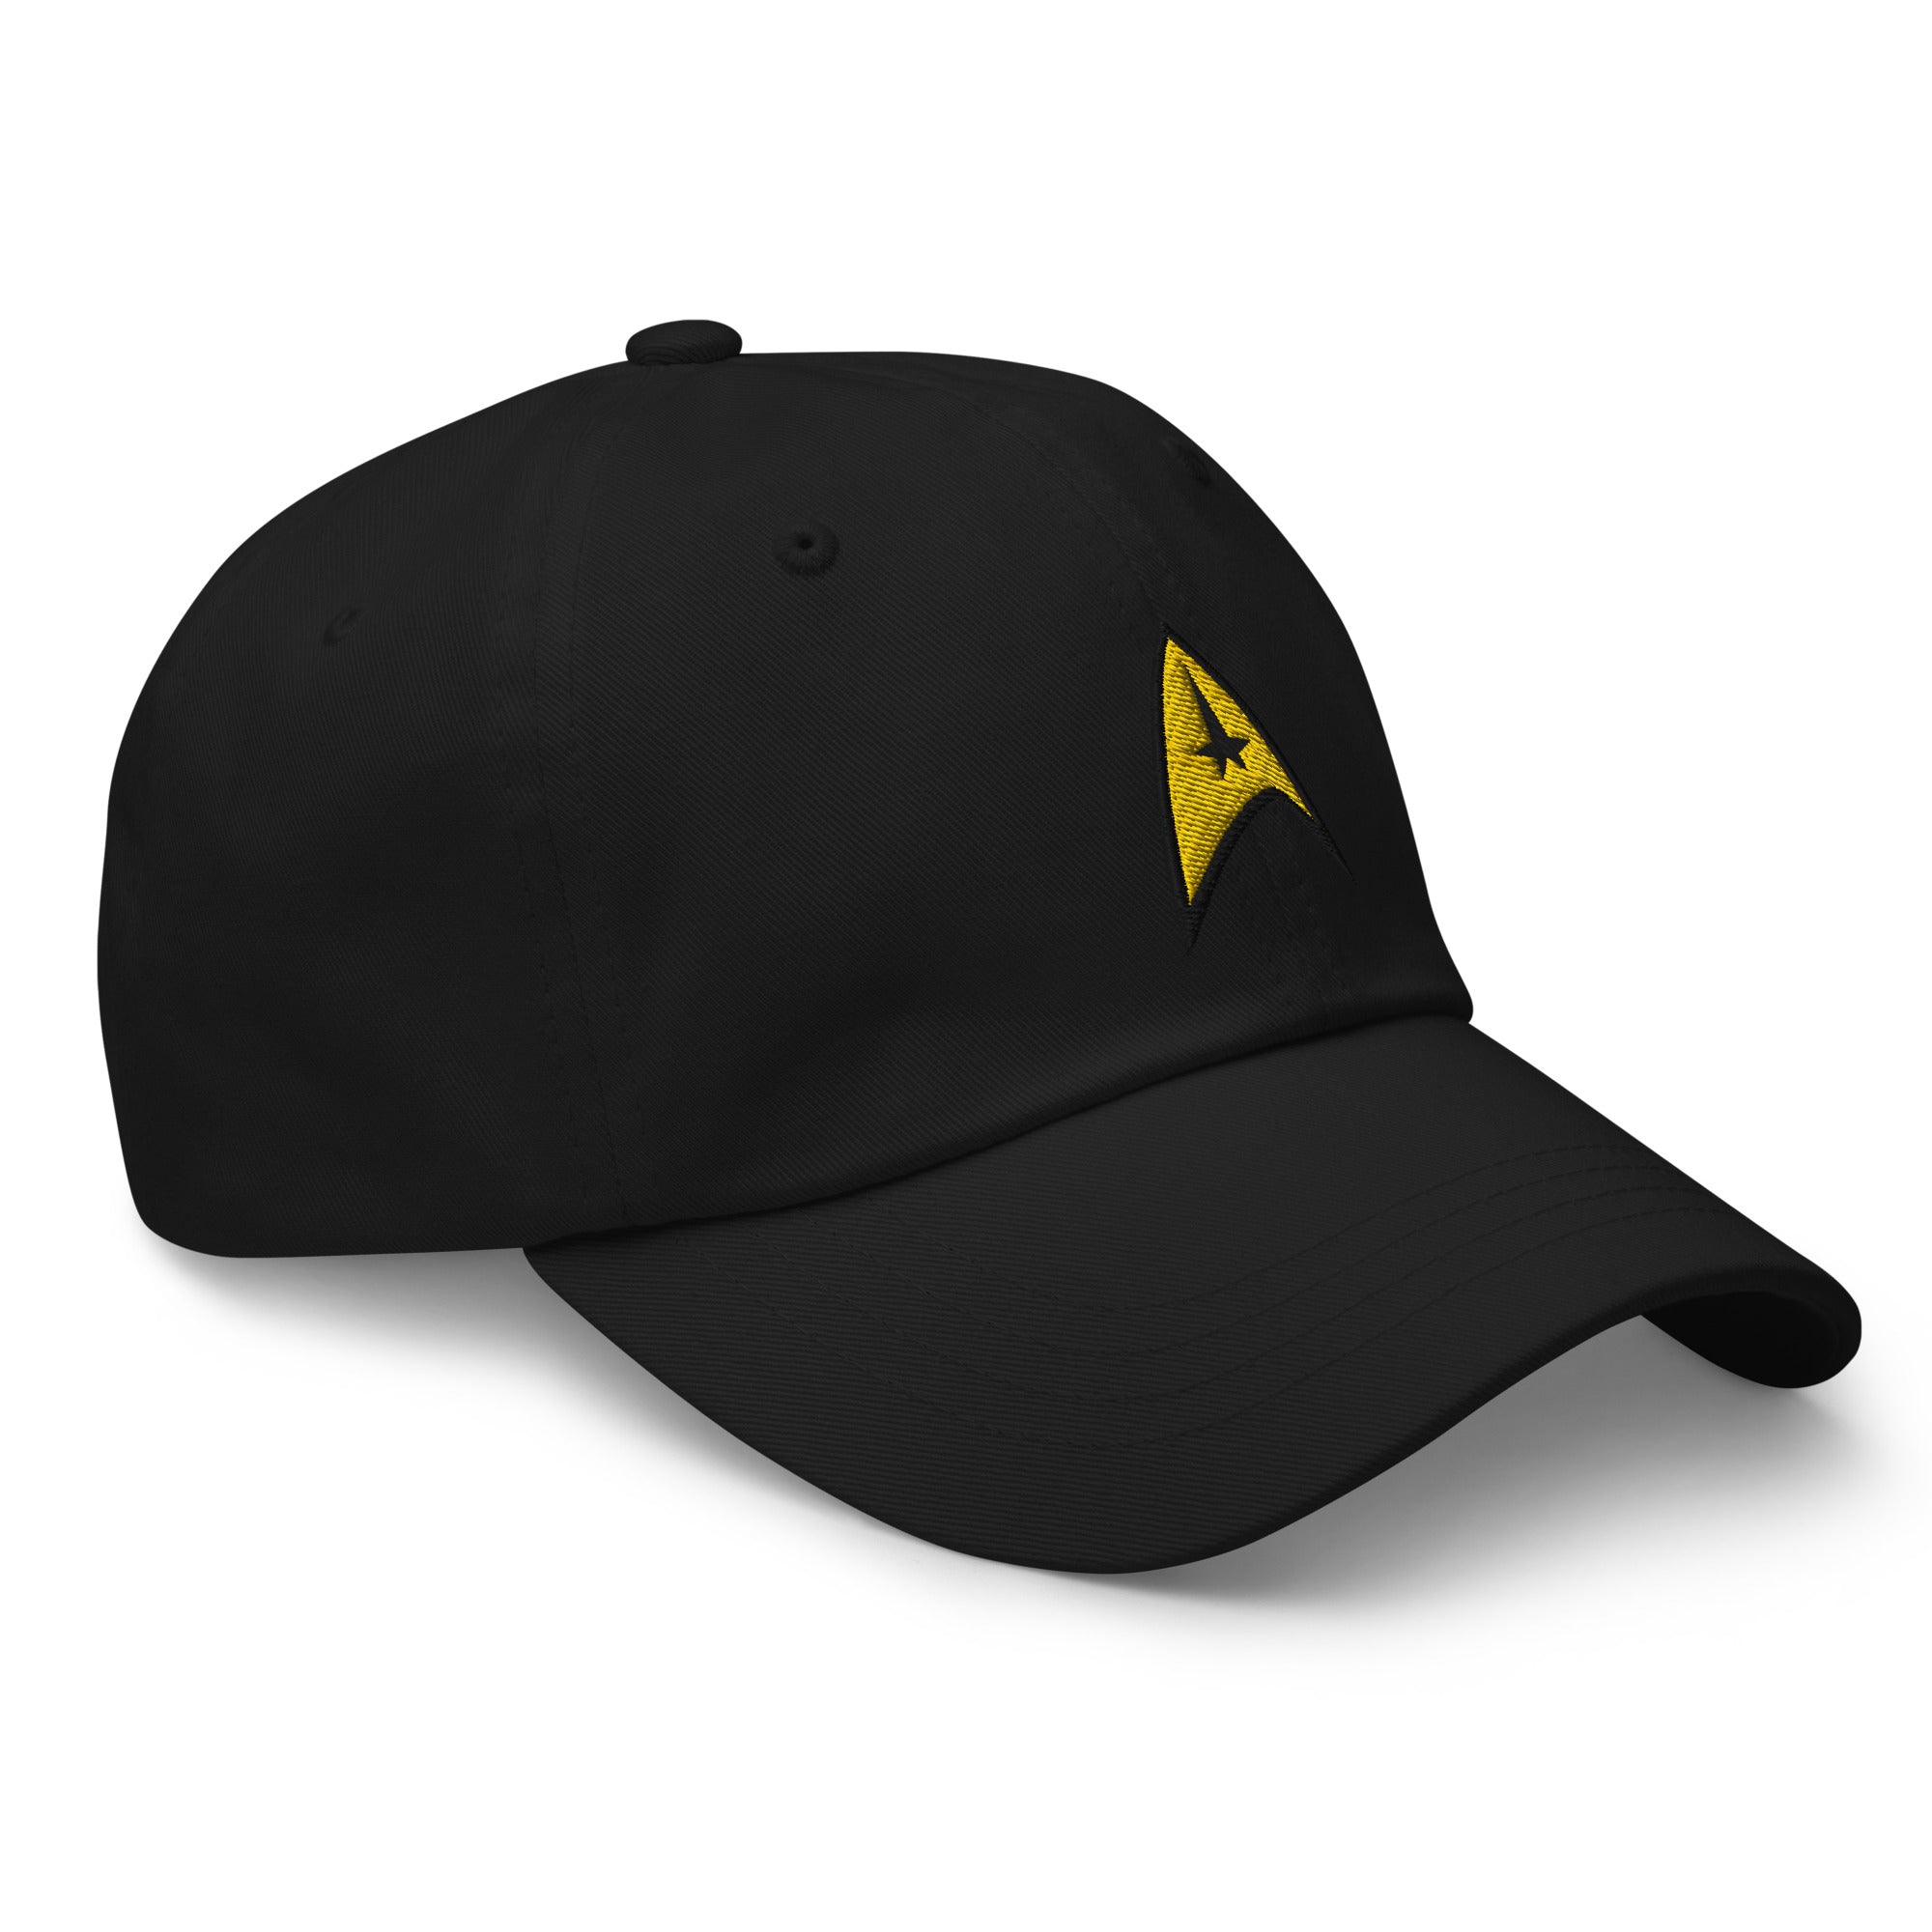 The Delta Insignia Starfleet Badge Embroidered Baseball Cap / Dad Hat Star Trek Style Cosplay - Edge of Life Designs